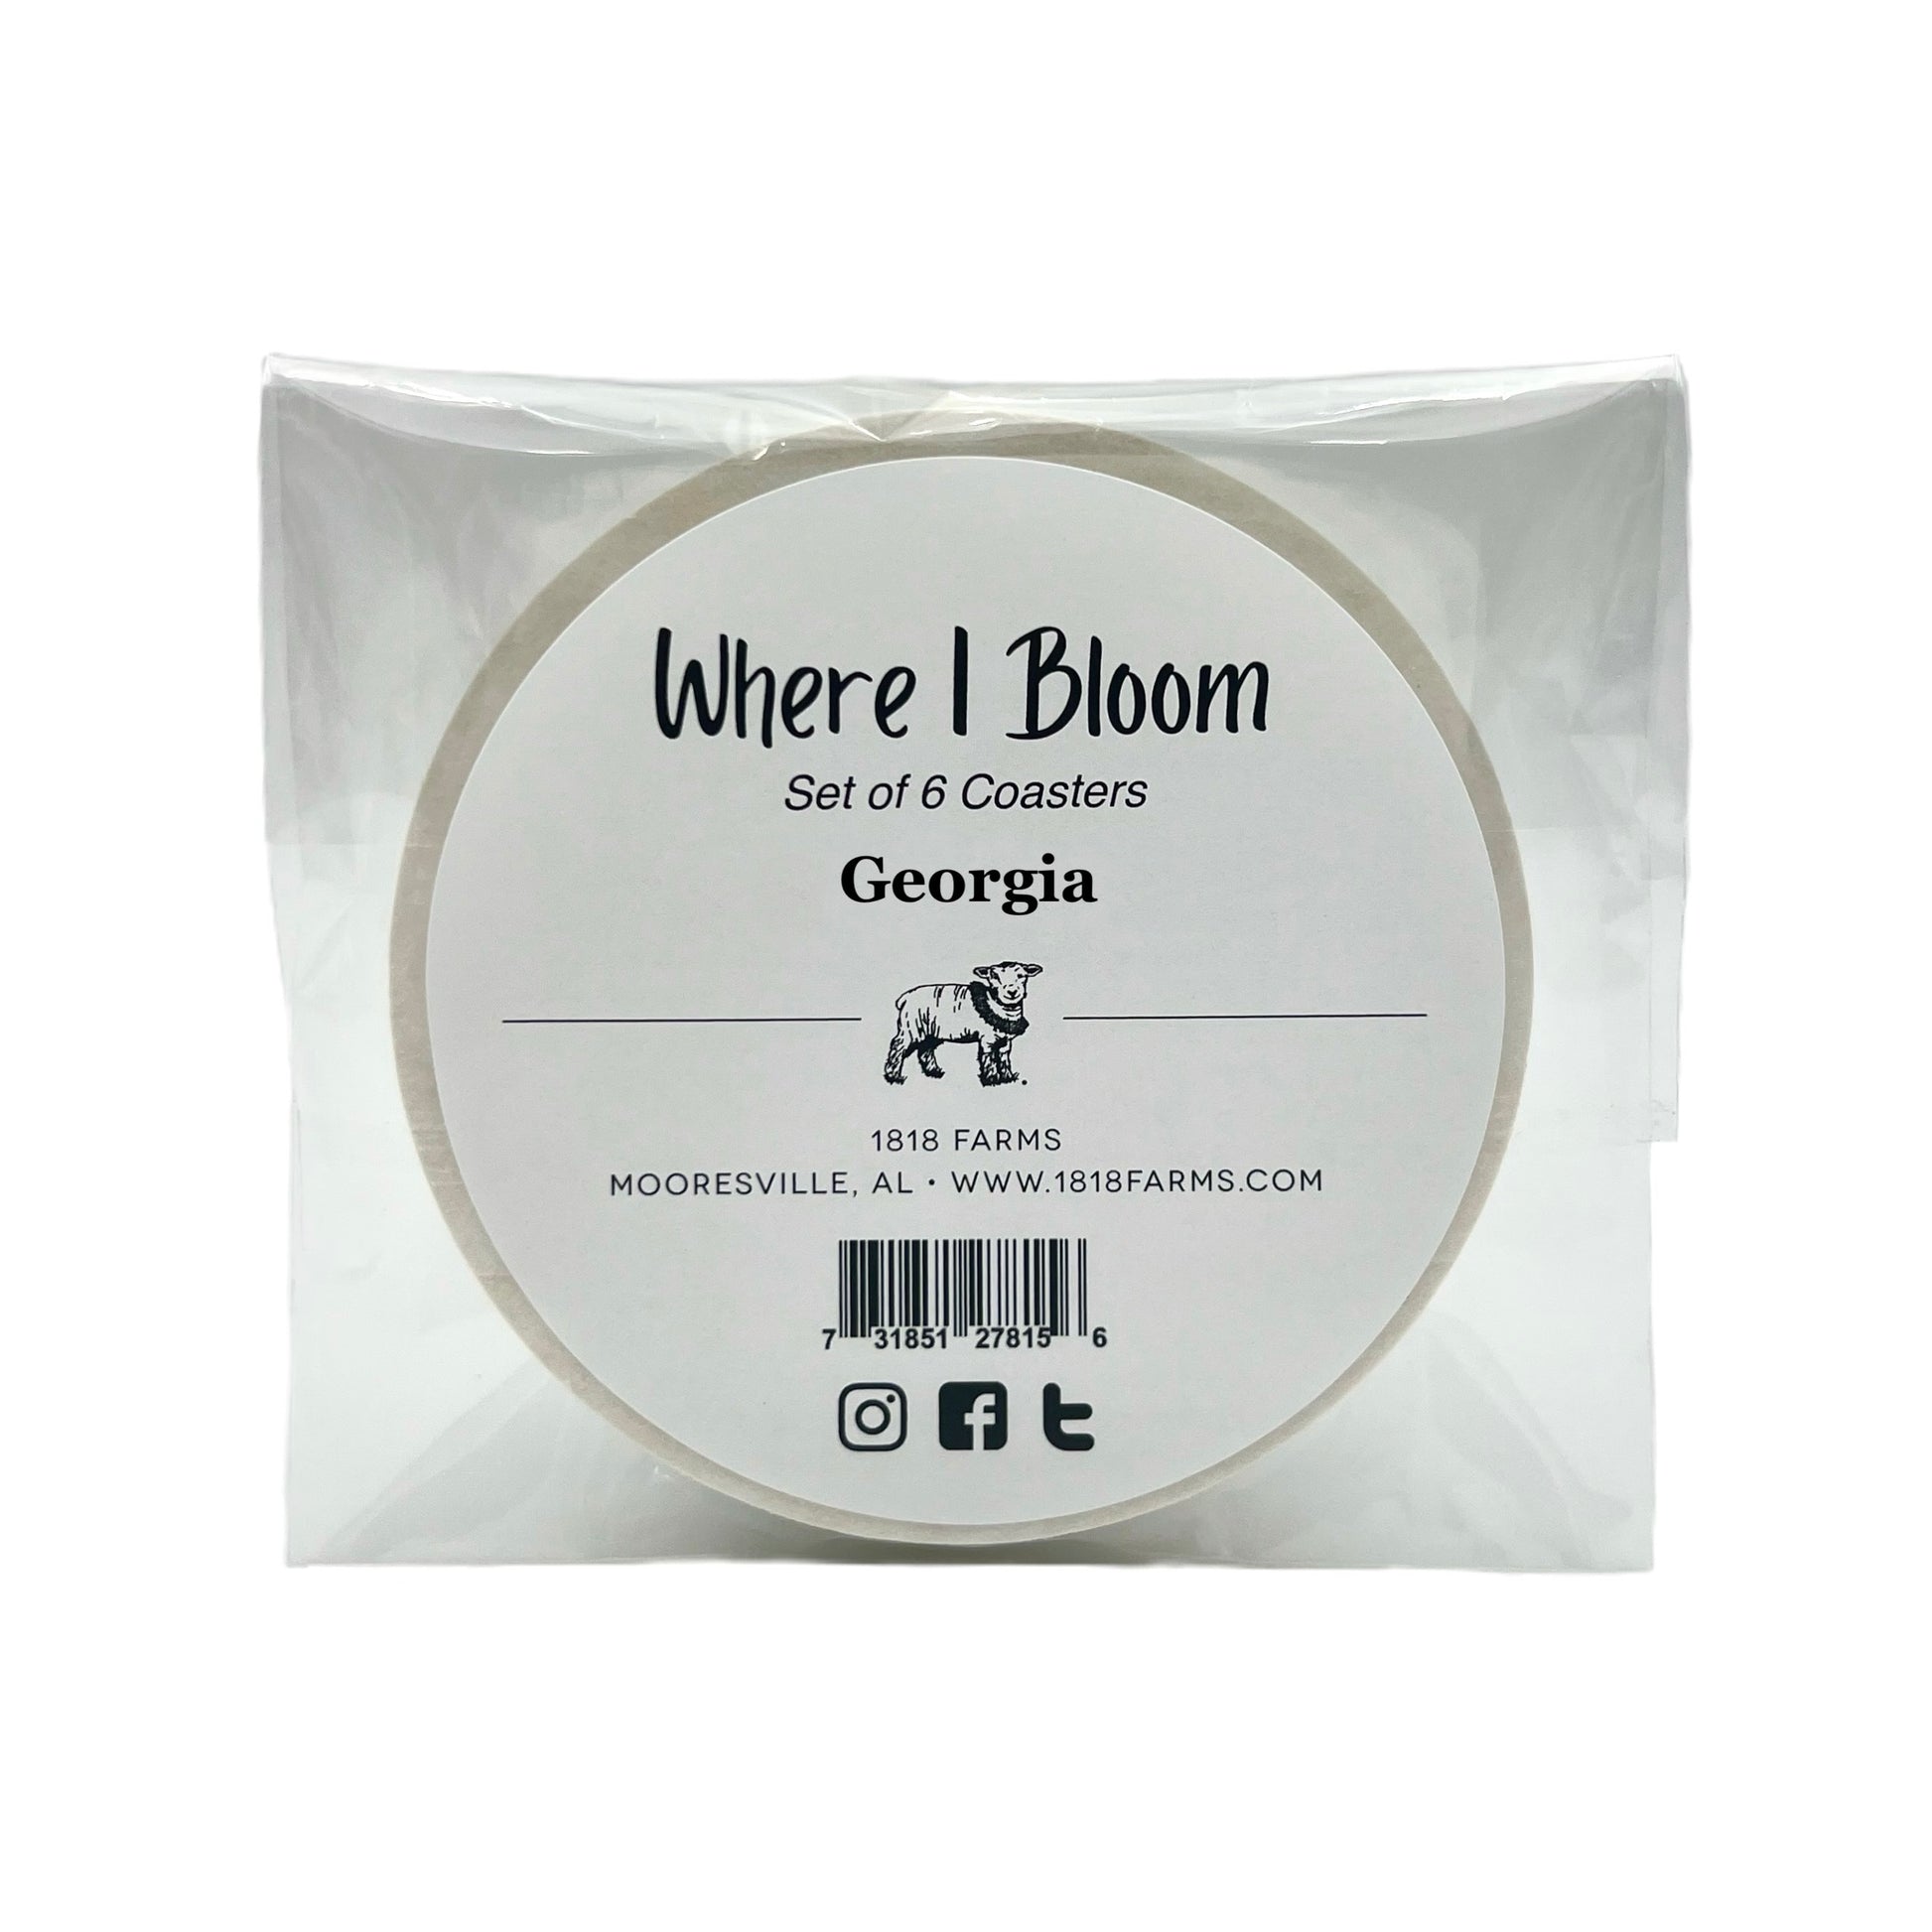 Georgia Themed Coasters (Set of 6)  - "Where I Bloom" Collection Coaster 1818 Farms   